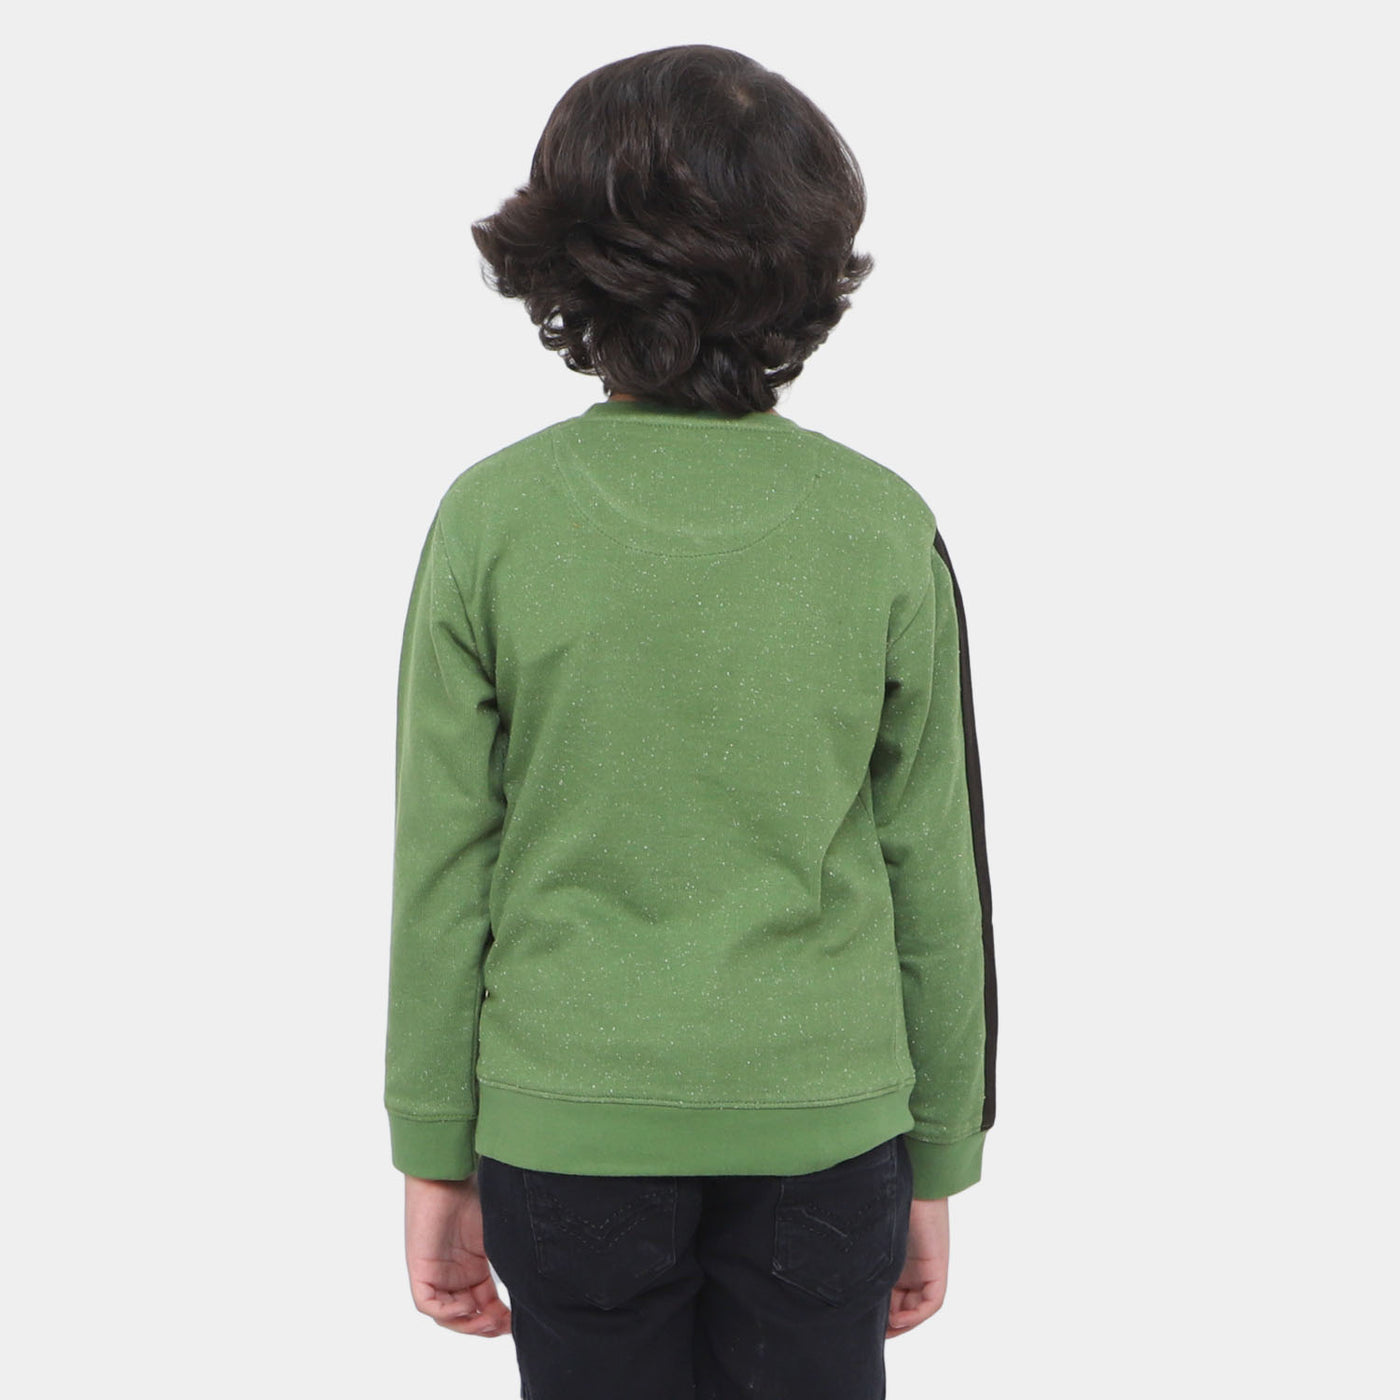 Boys Sweatshirt Ready To Play - Green